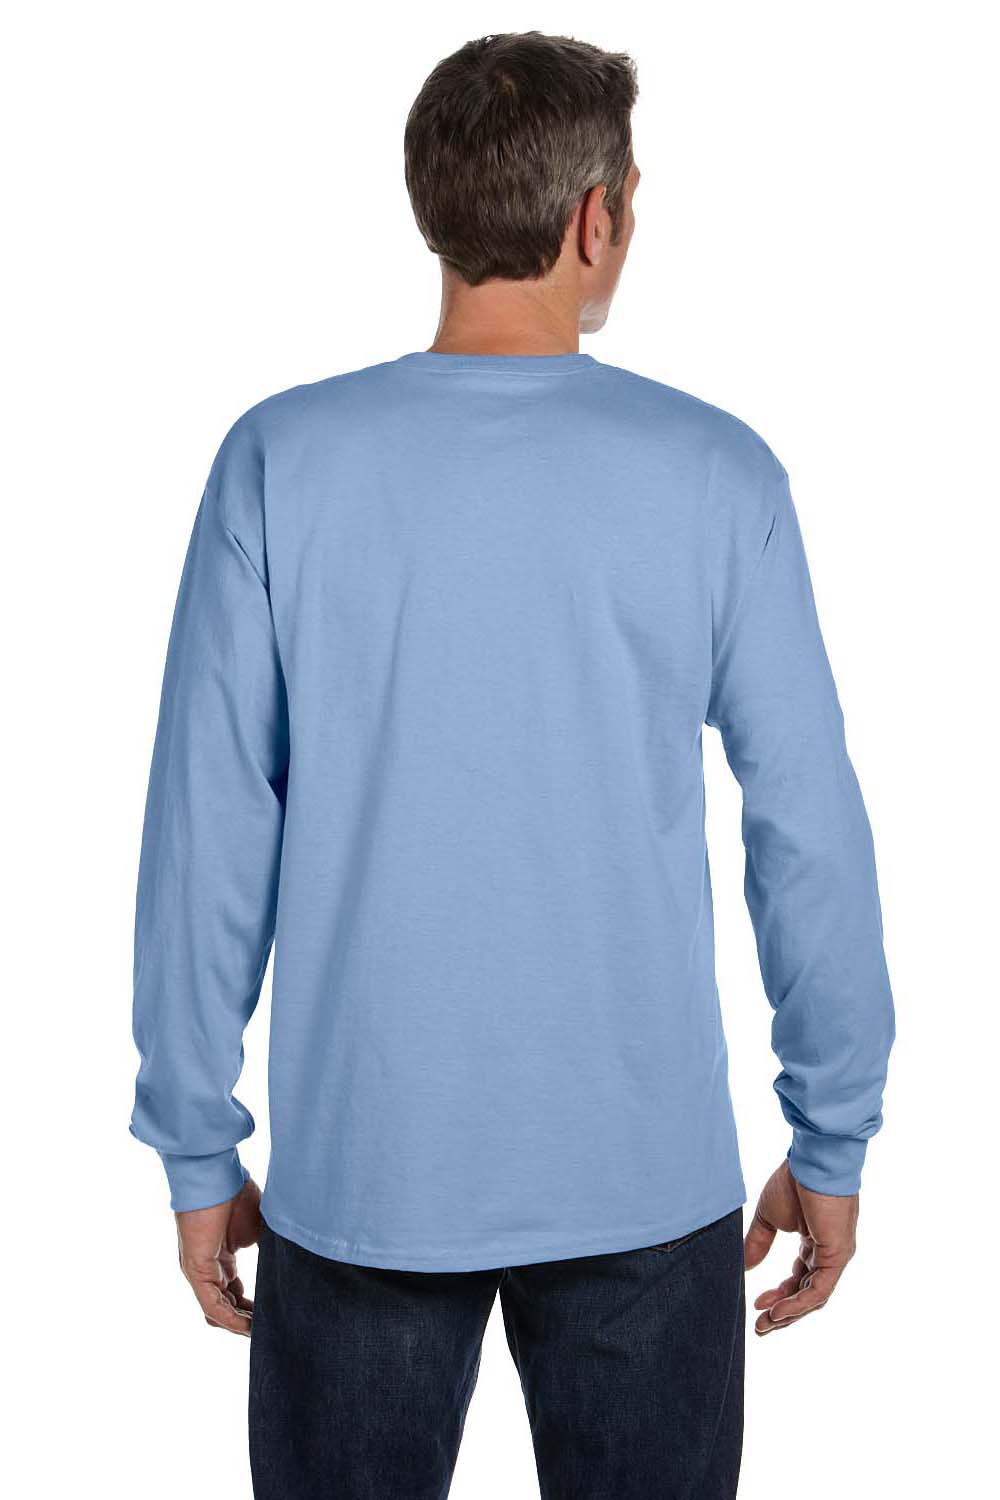 Hanes 5596 Mens ComfortSoft Long Sleeve Crewneck T-Shirt w/ Pocket Light Blue Back